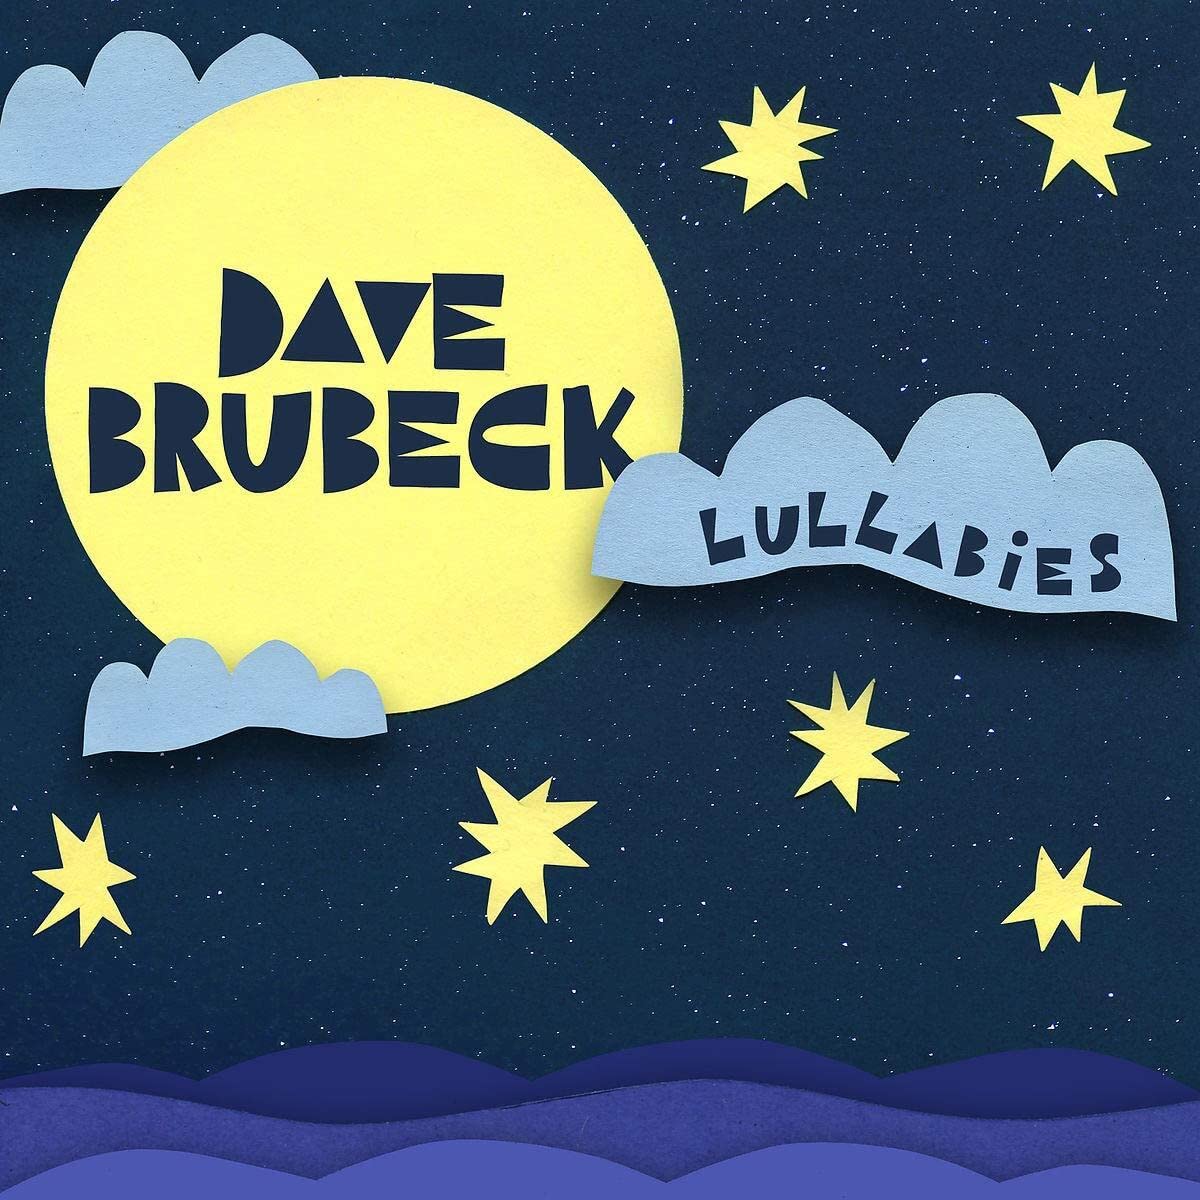 Dave Brubeck – Lullabies